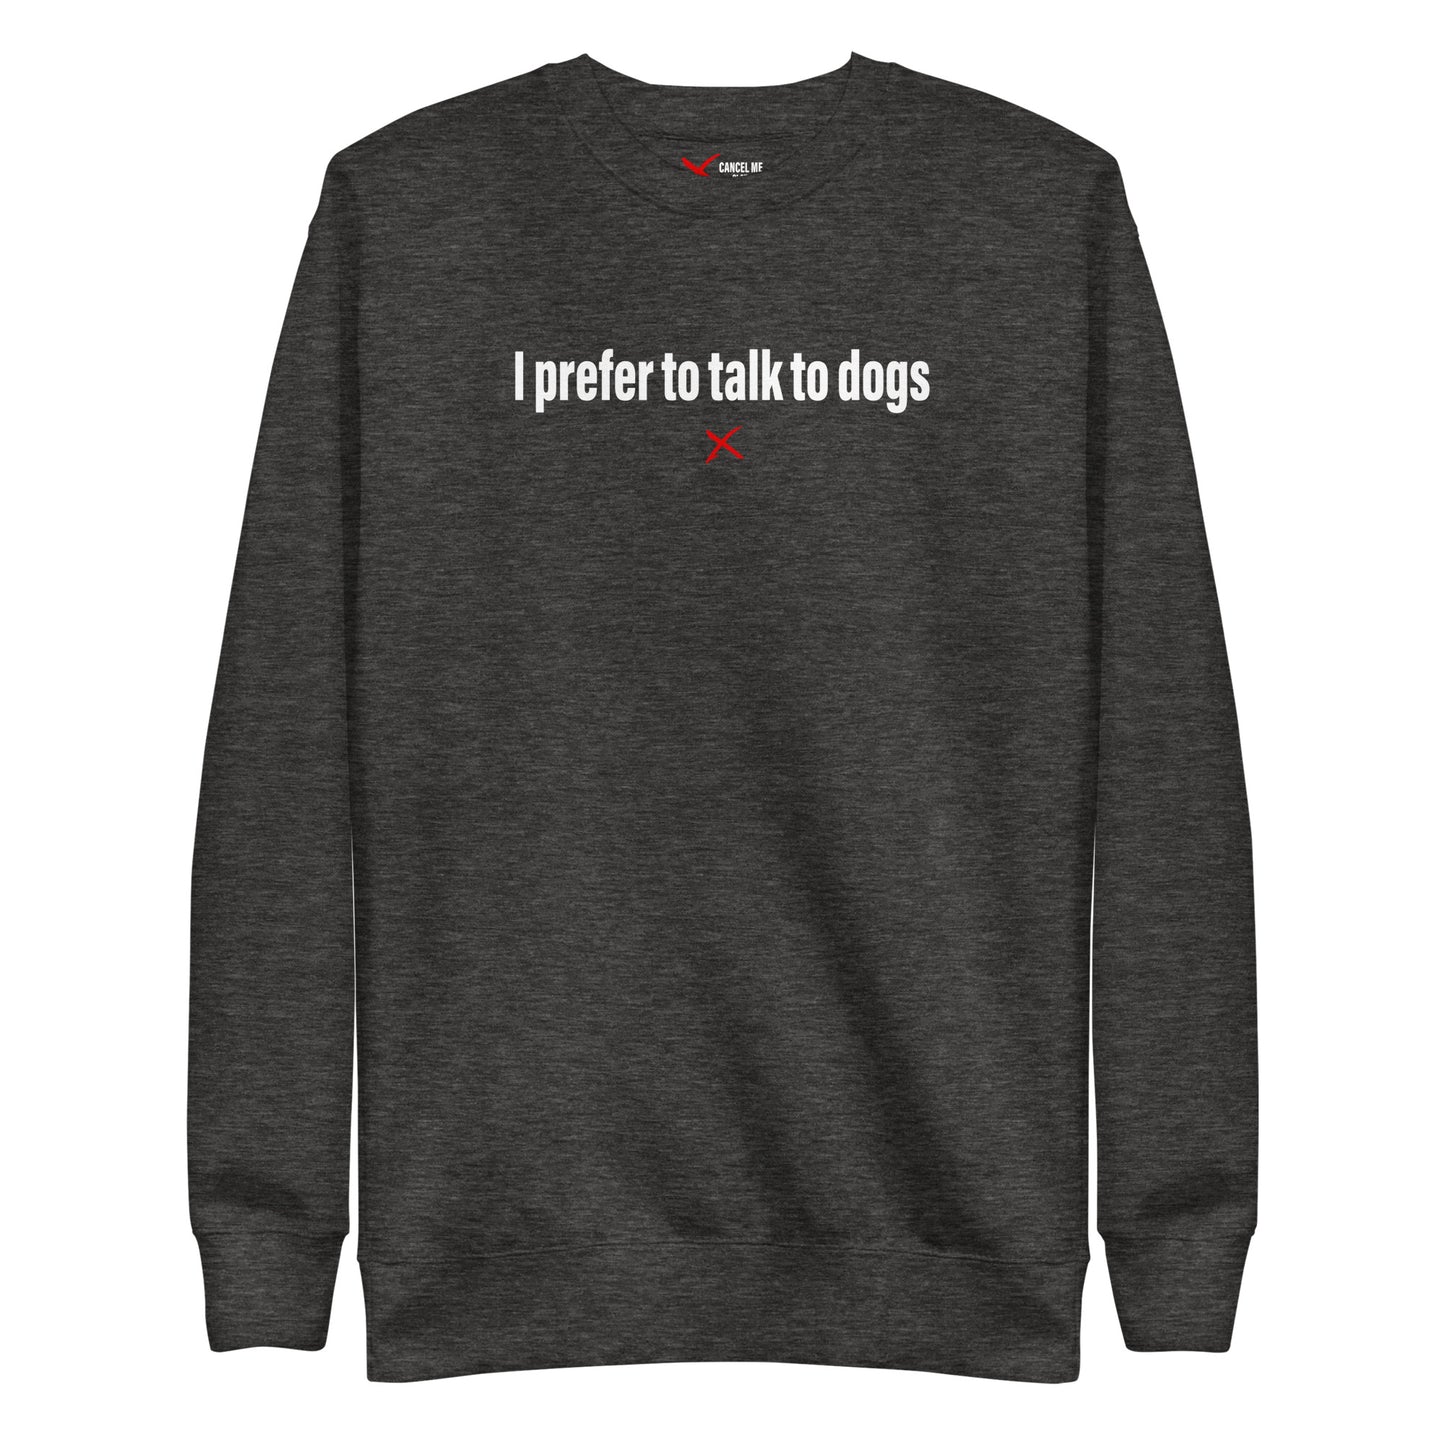 I prefer to talk to dogs - Sweatshirt